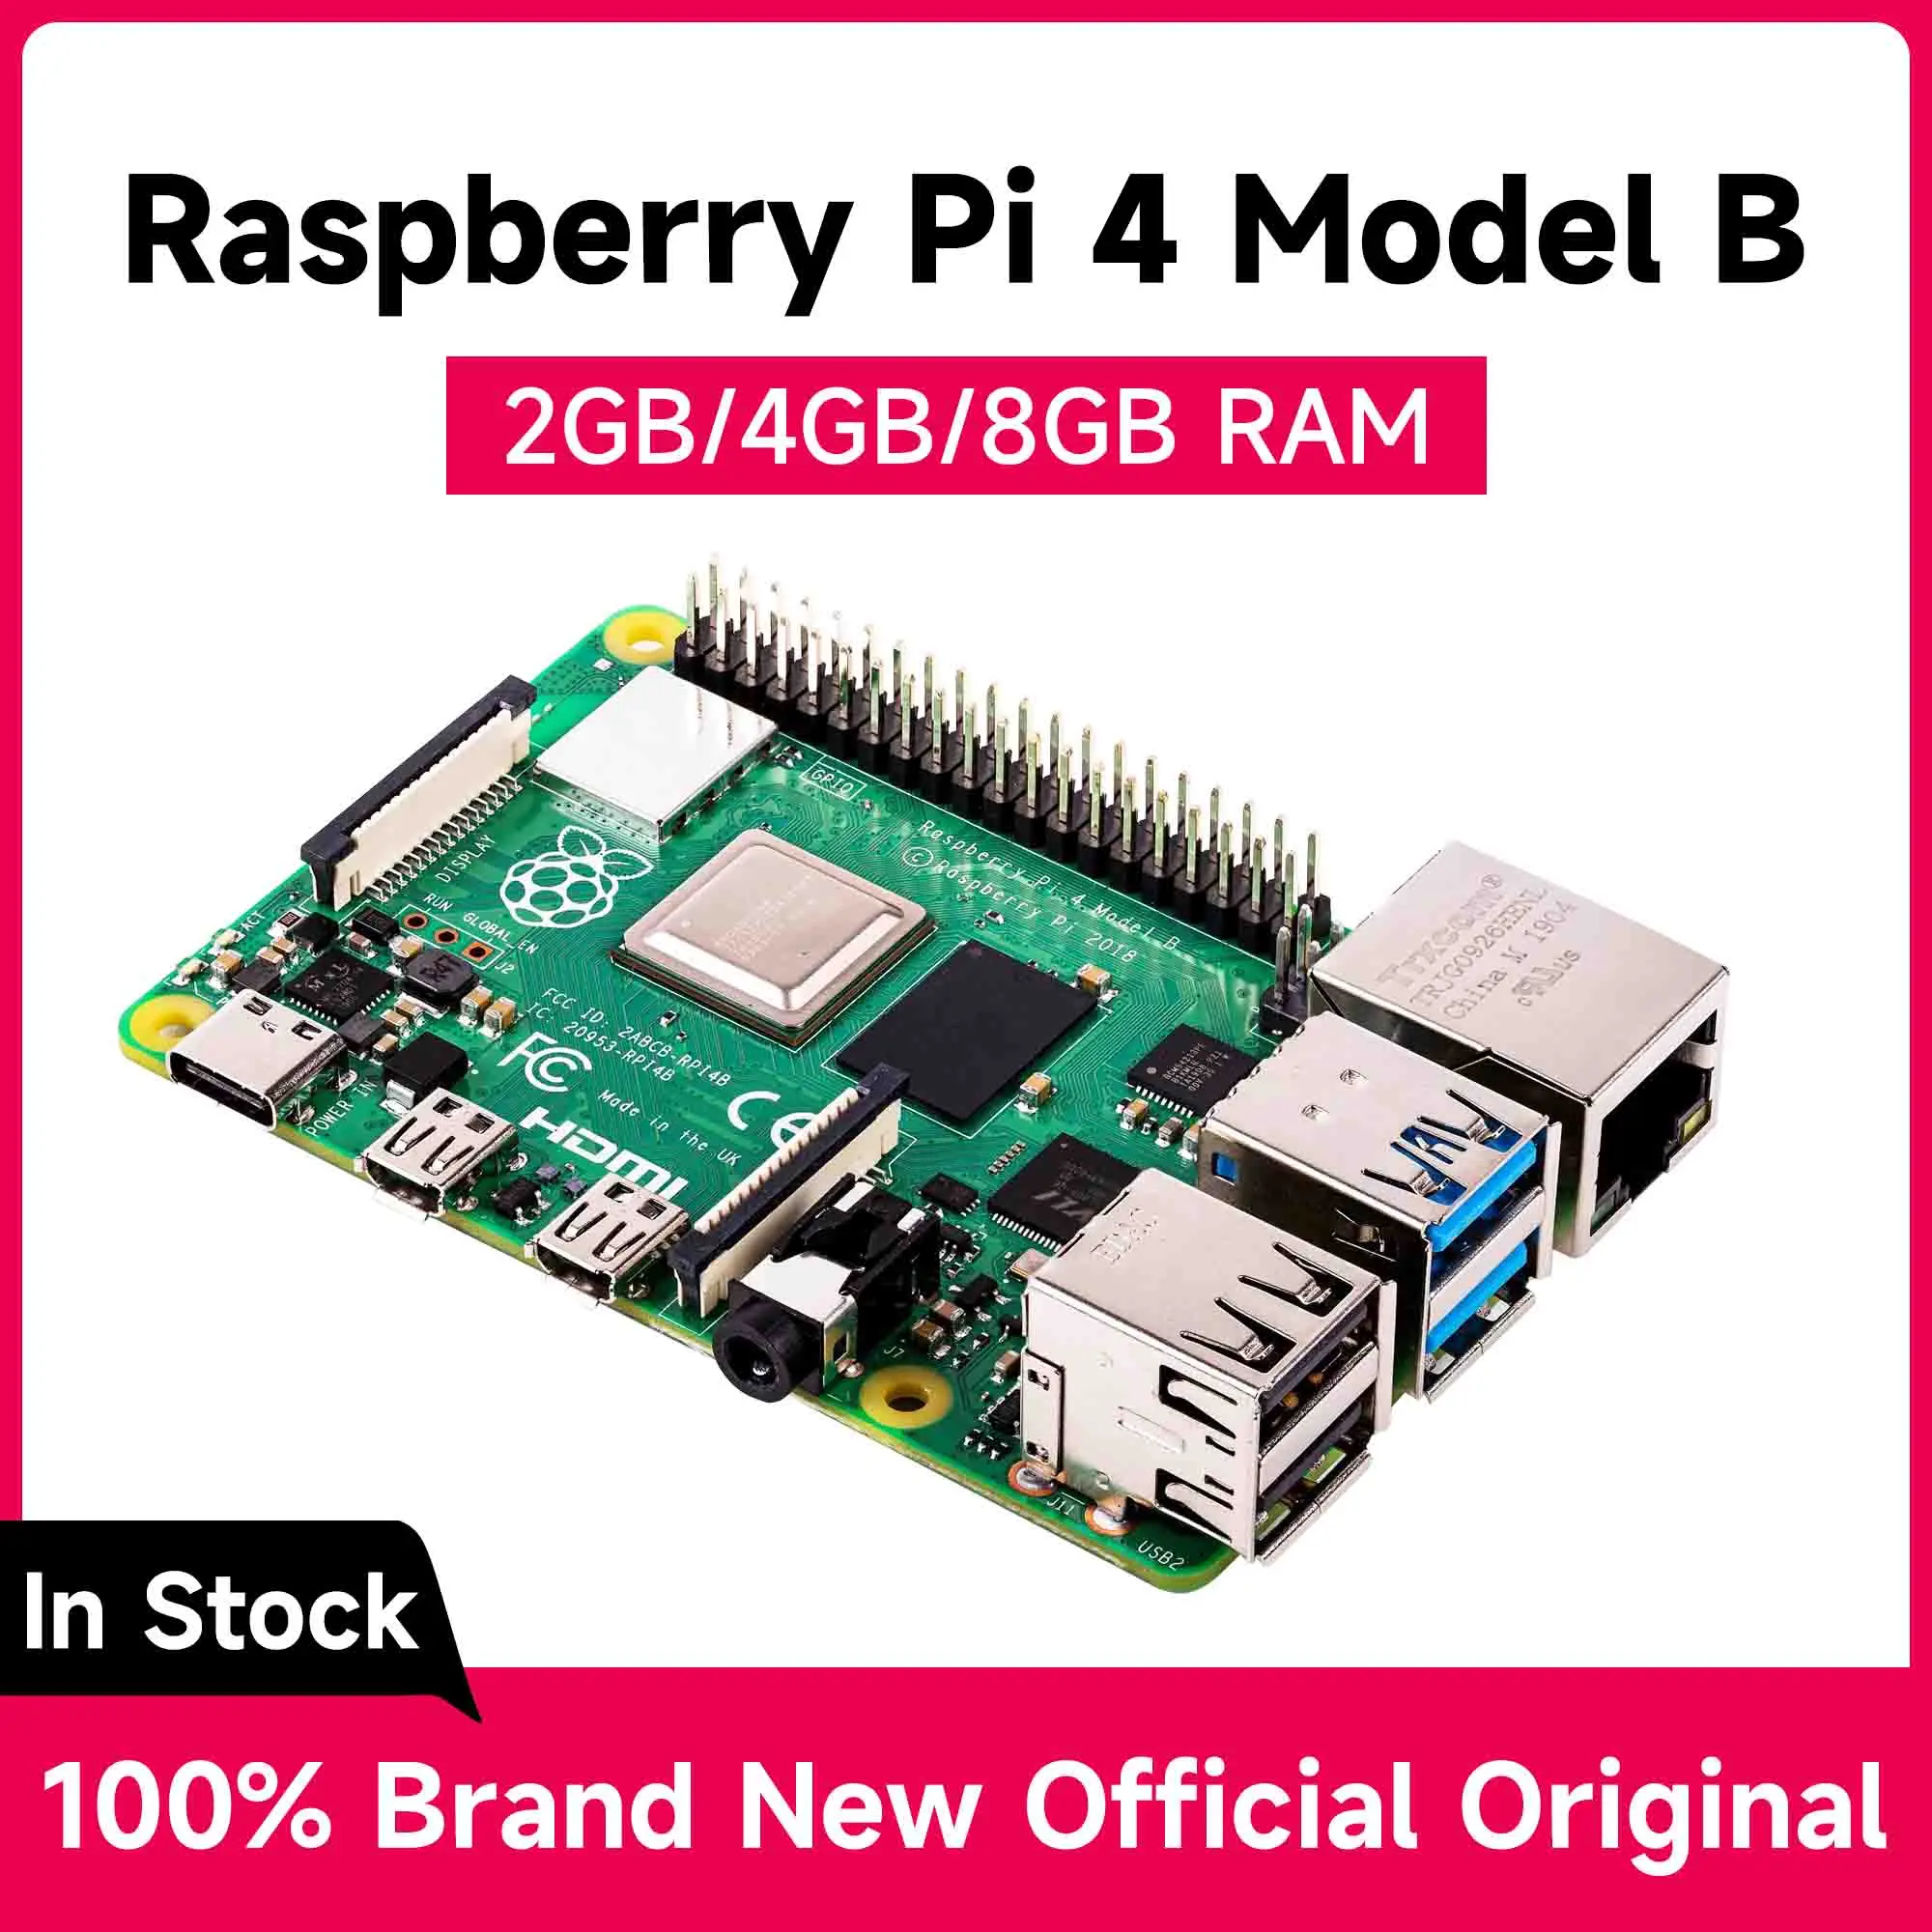 8GB of RAM on Raspberry Pi 4 & 64bit support - NotEnoughTech